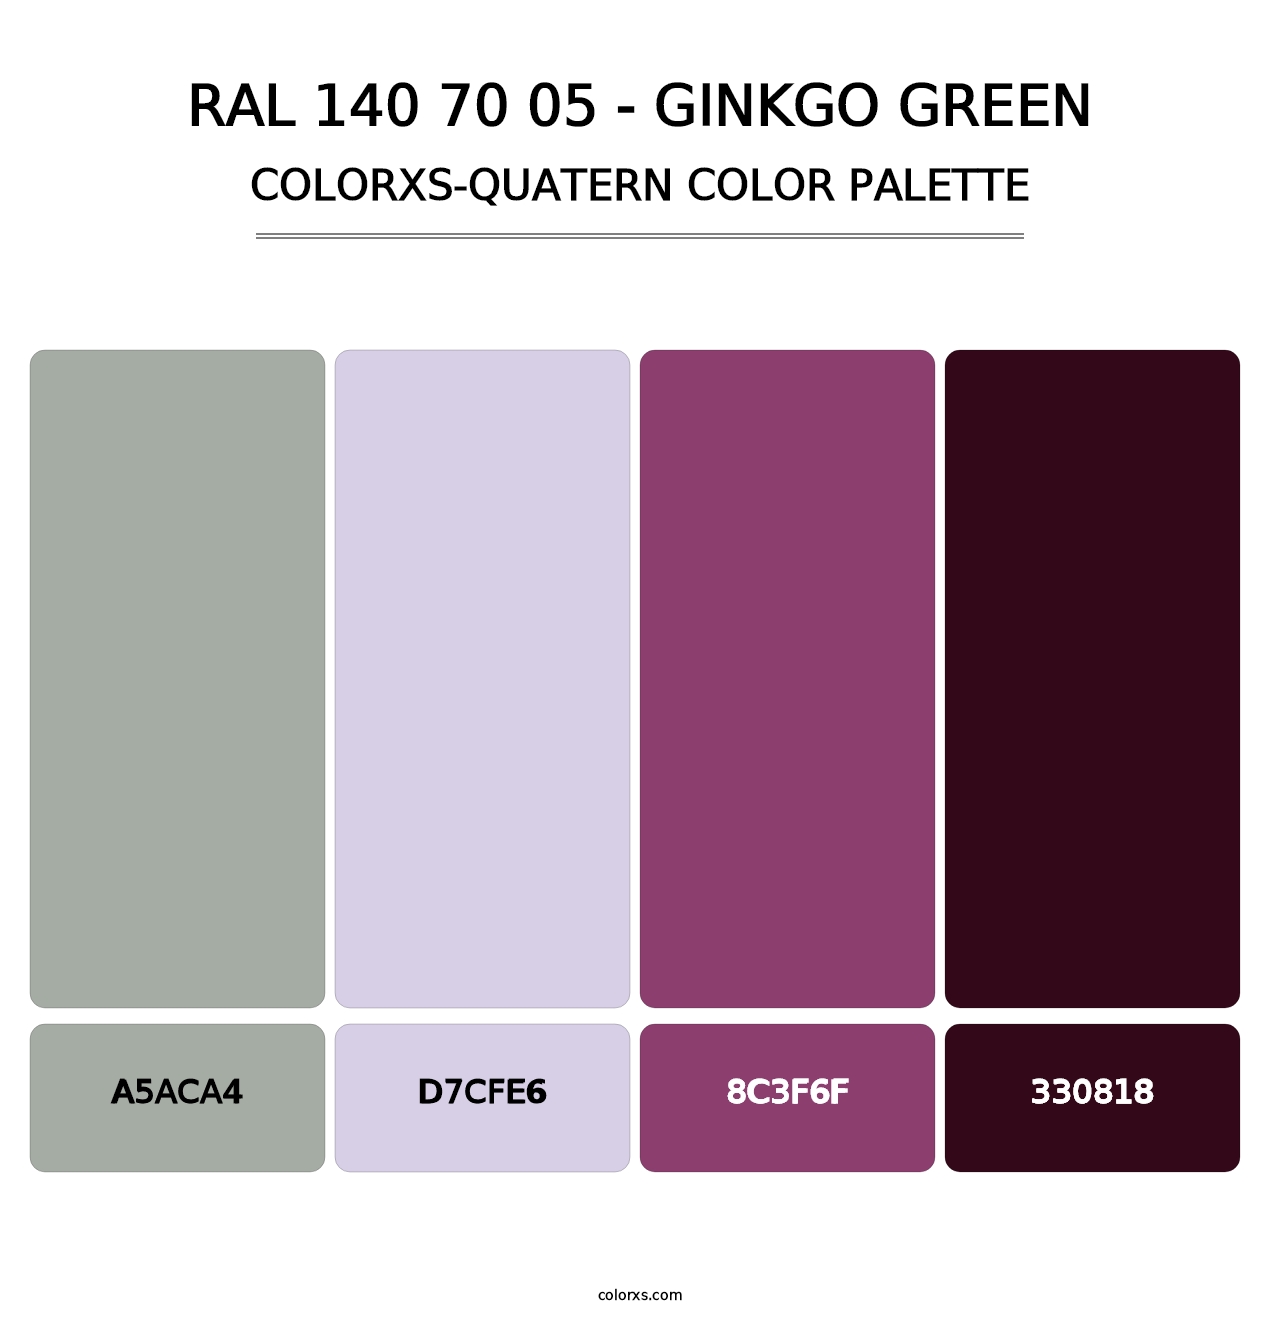 RAL 140 70 05 - Ginkgo Green - Colorxs Quatern Palette